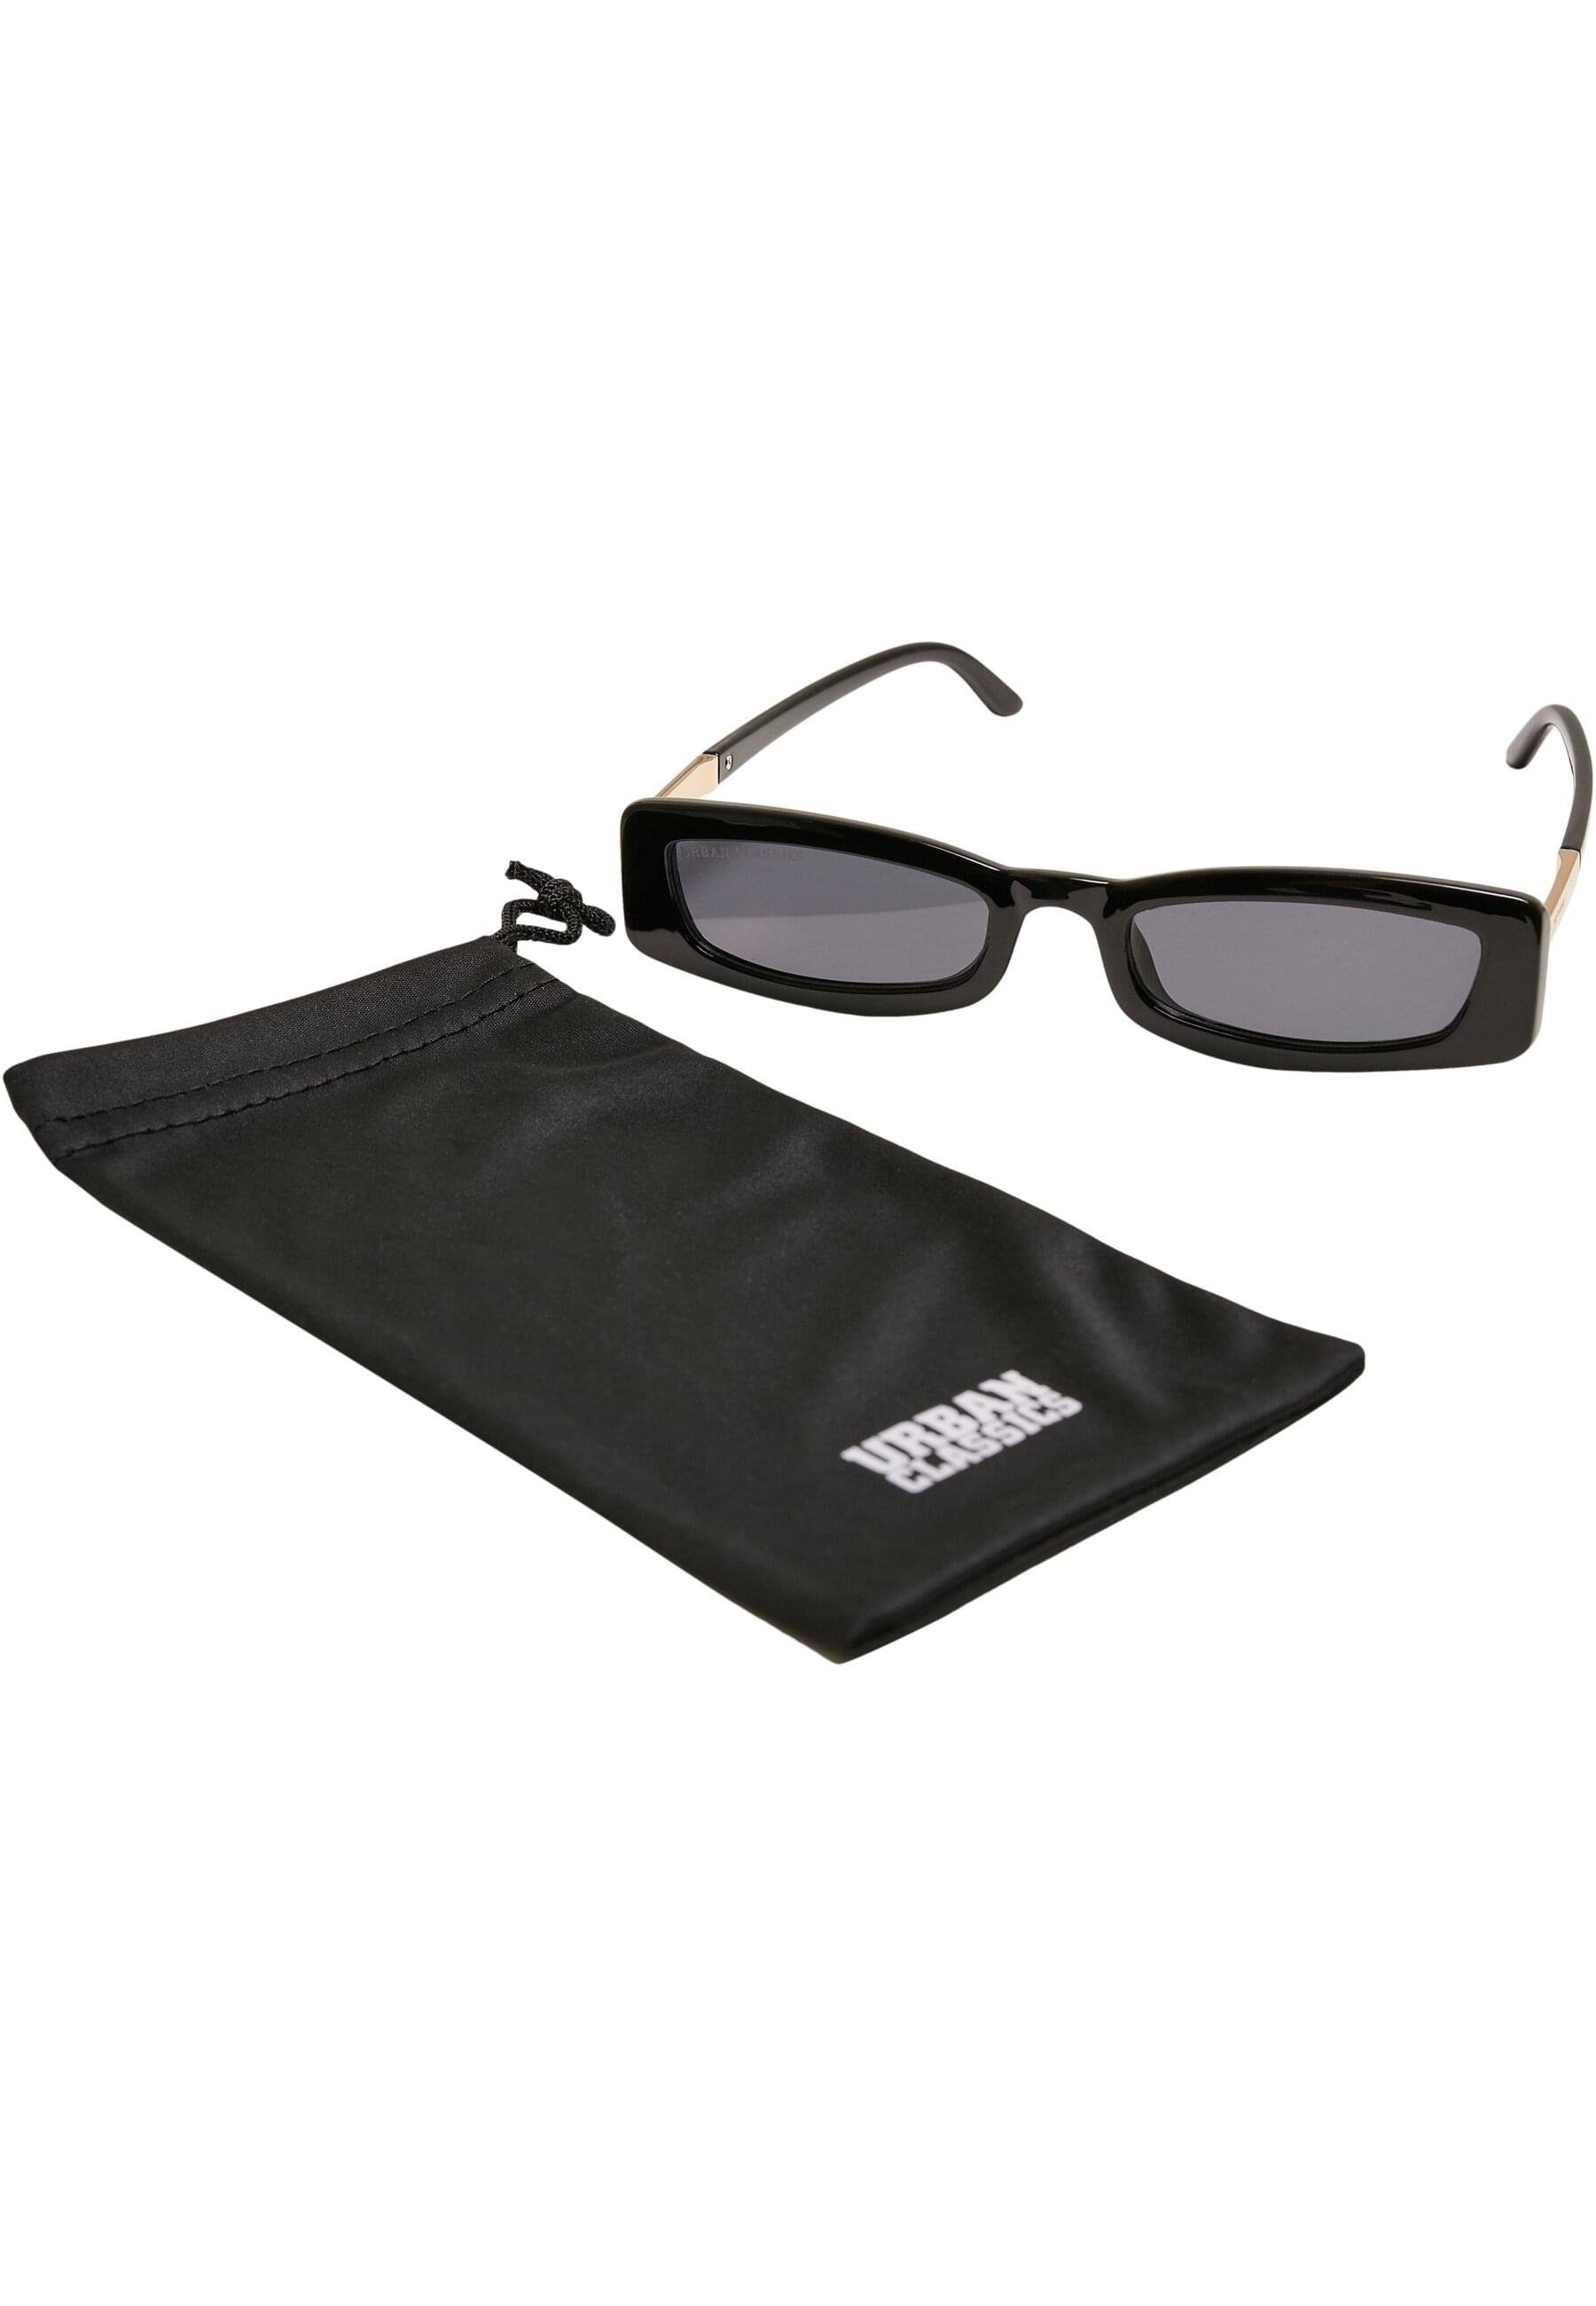 URBAN Sonnenbrille Minicoy CLASSICS Sunglasses Unisex